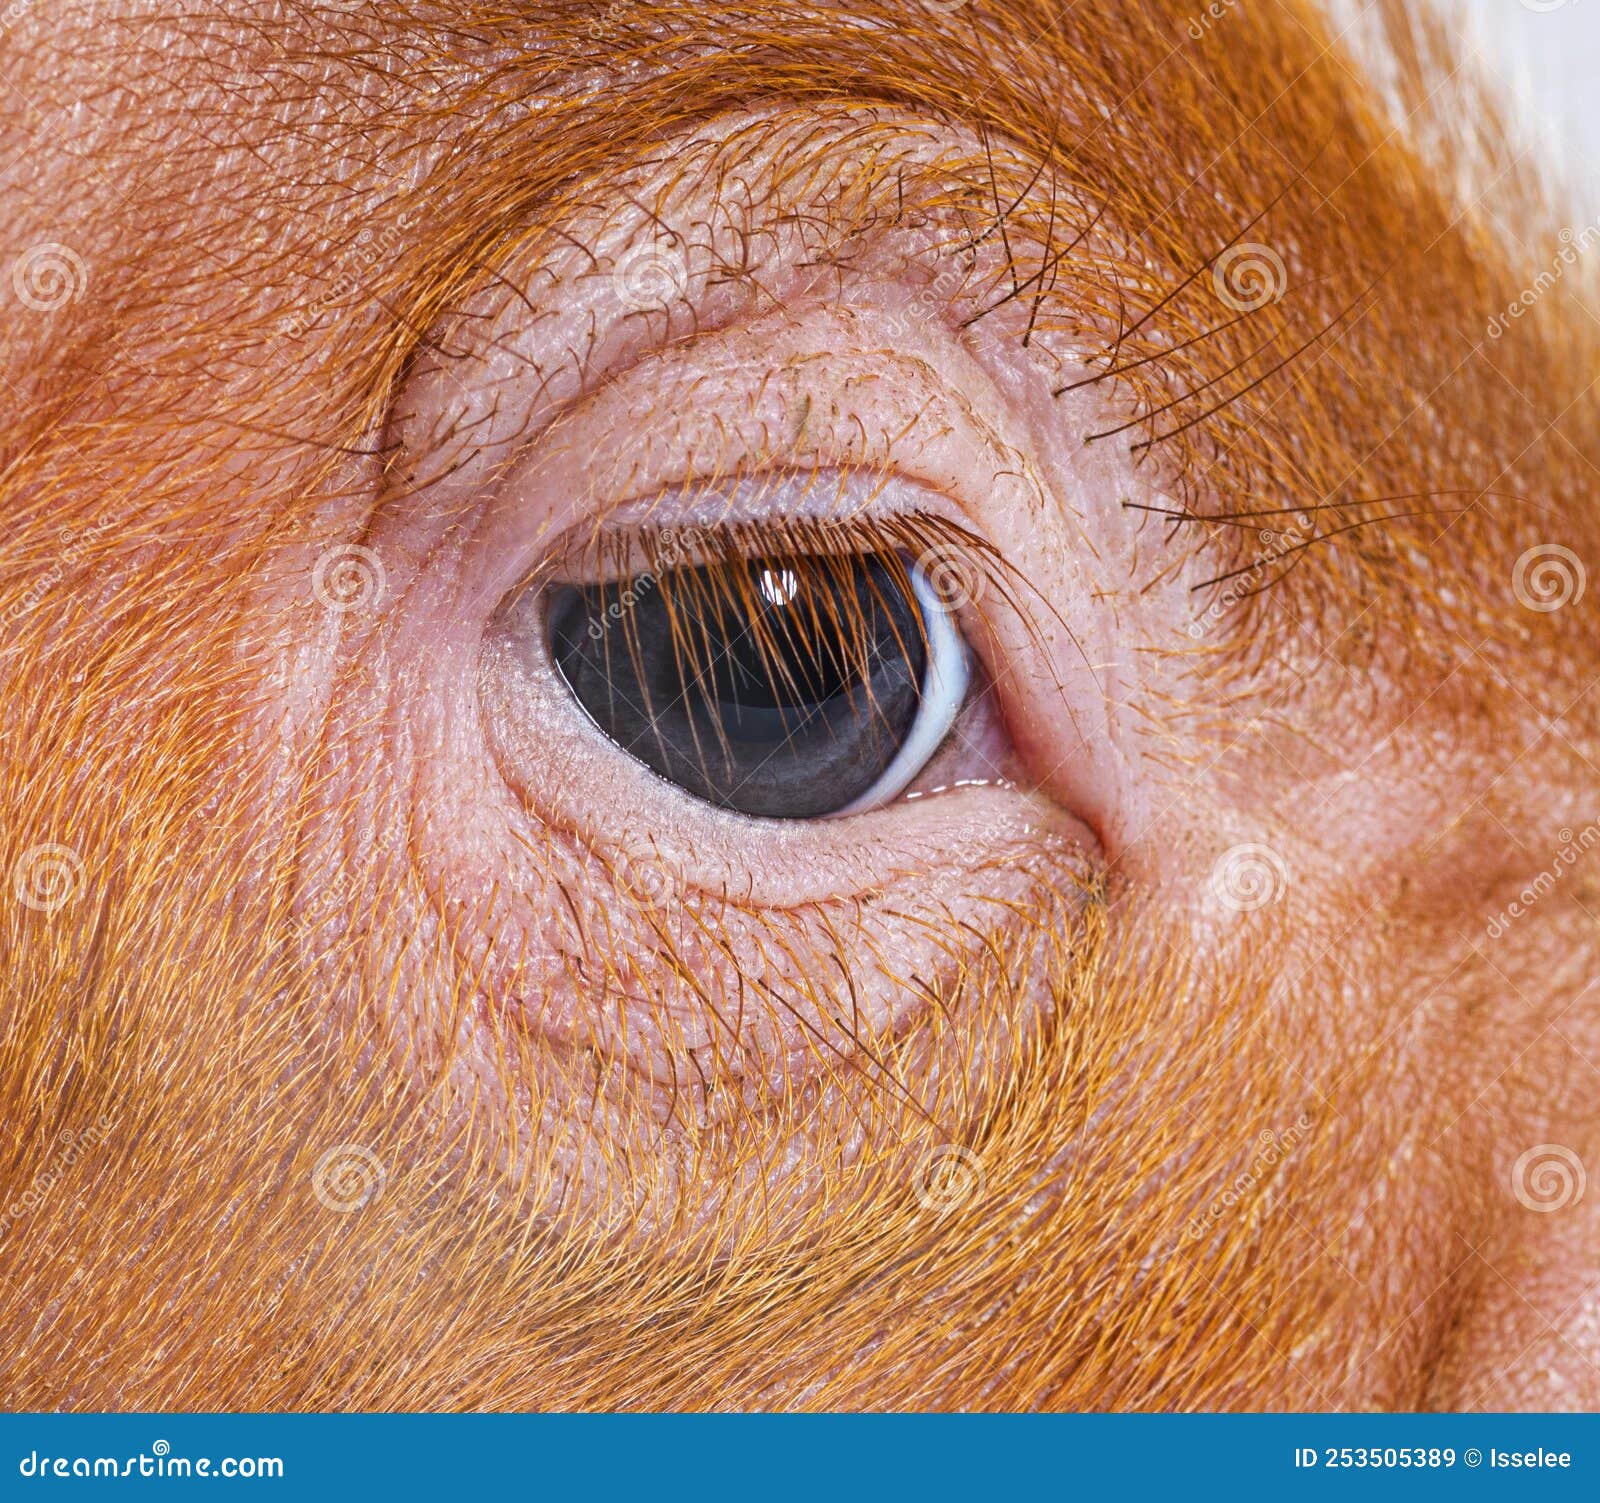 close-up on a young pig eye and eyelashes mixedbreed